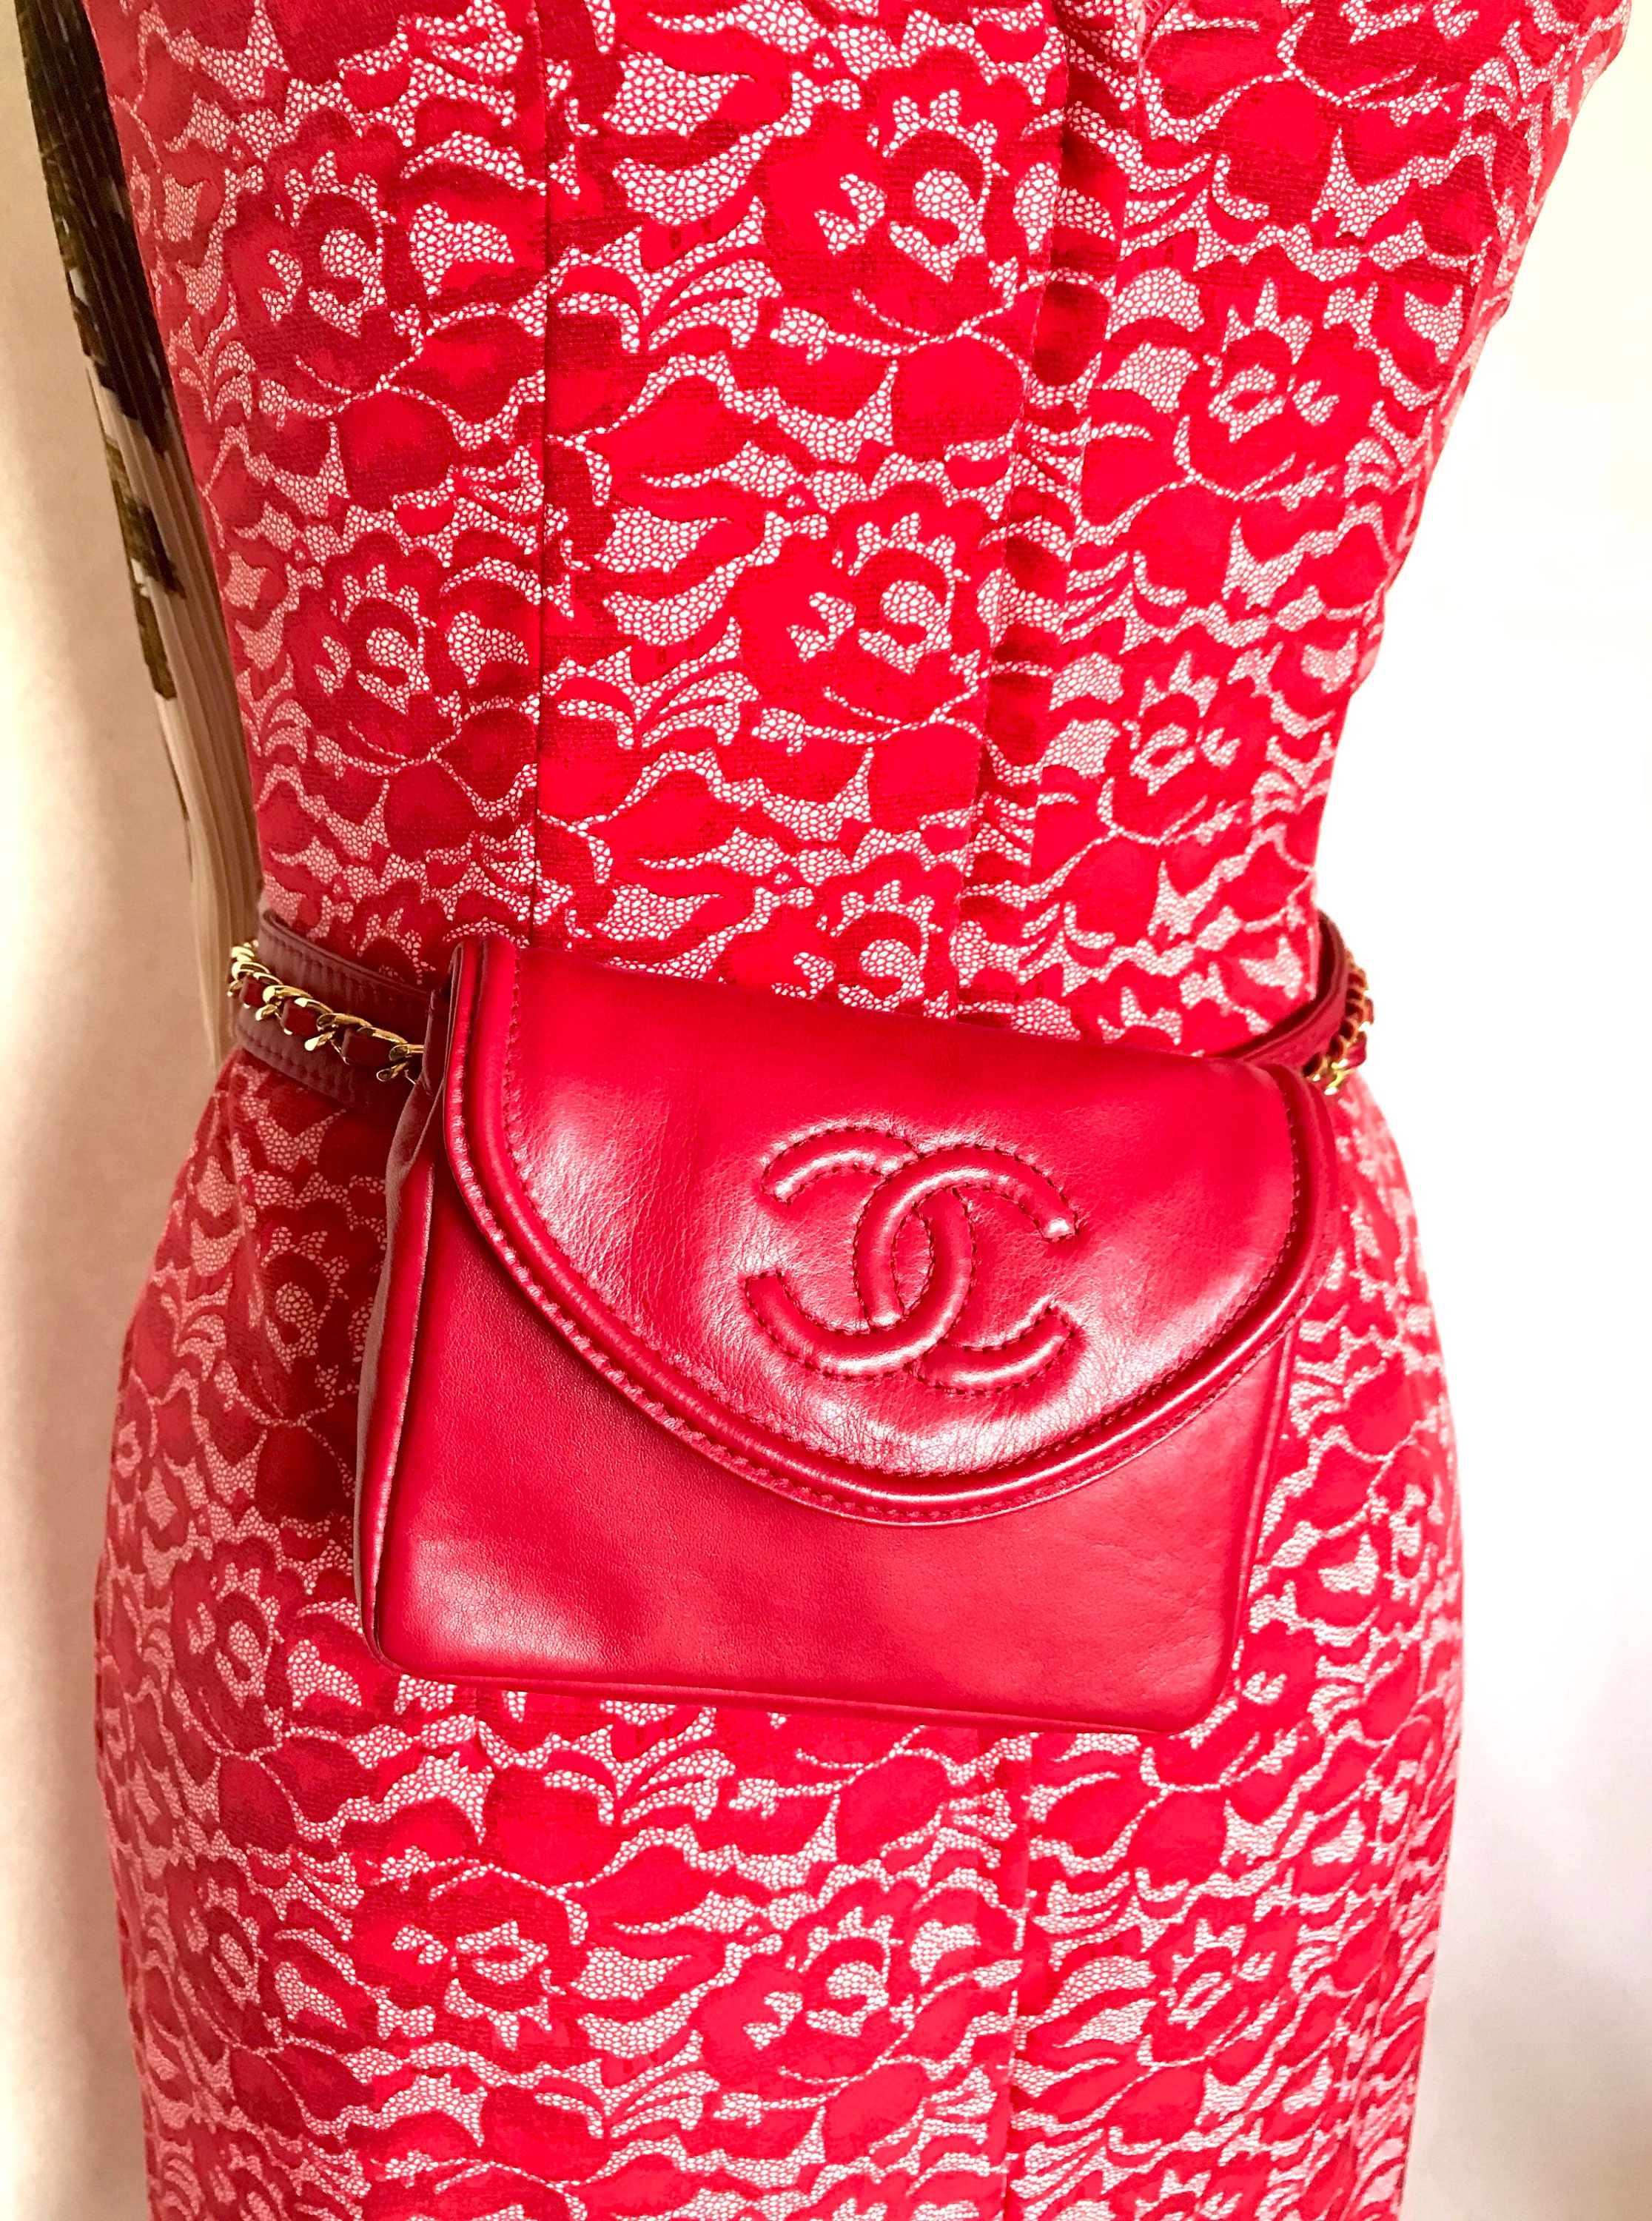 Vintage CHANEL Red Fanny Pack Leather Belt Bag With 